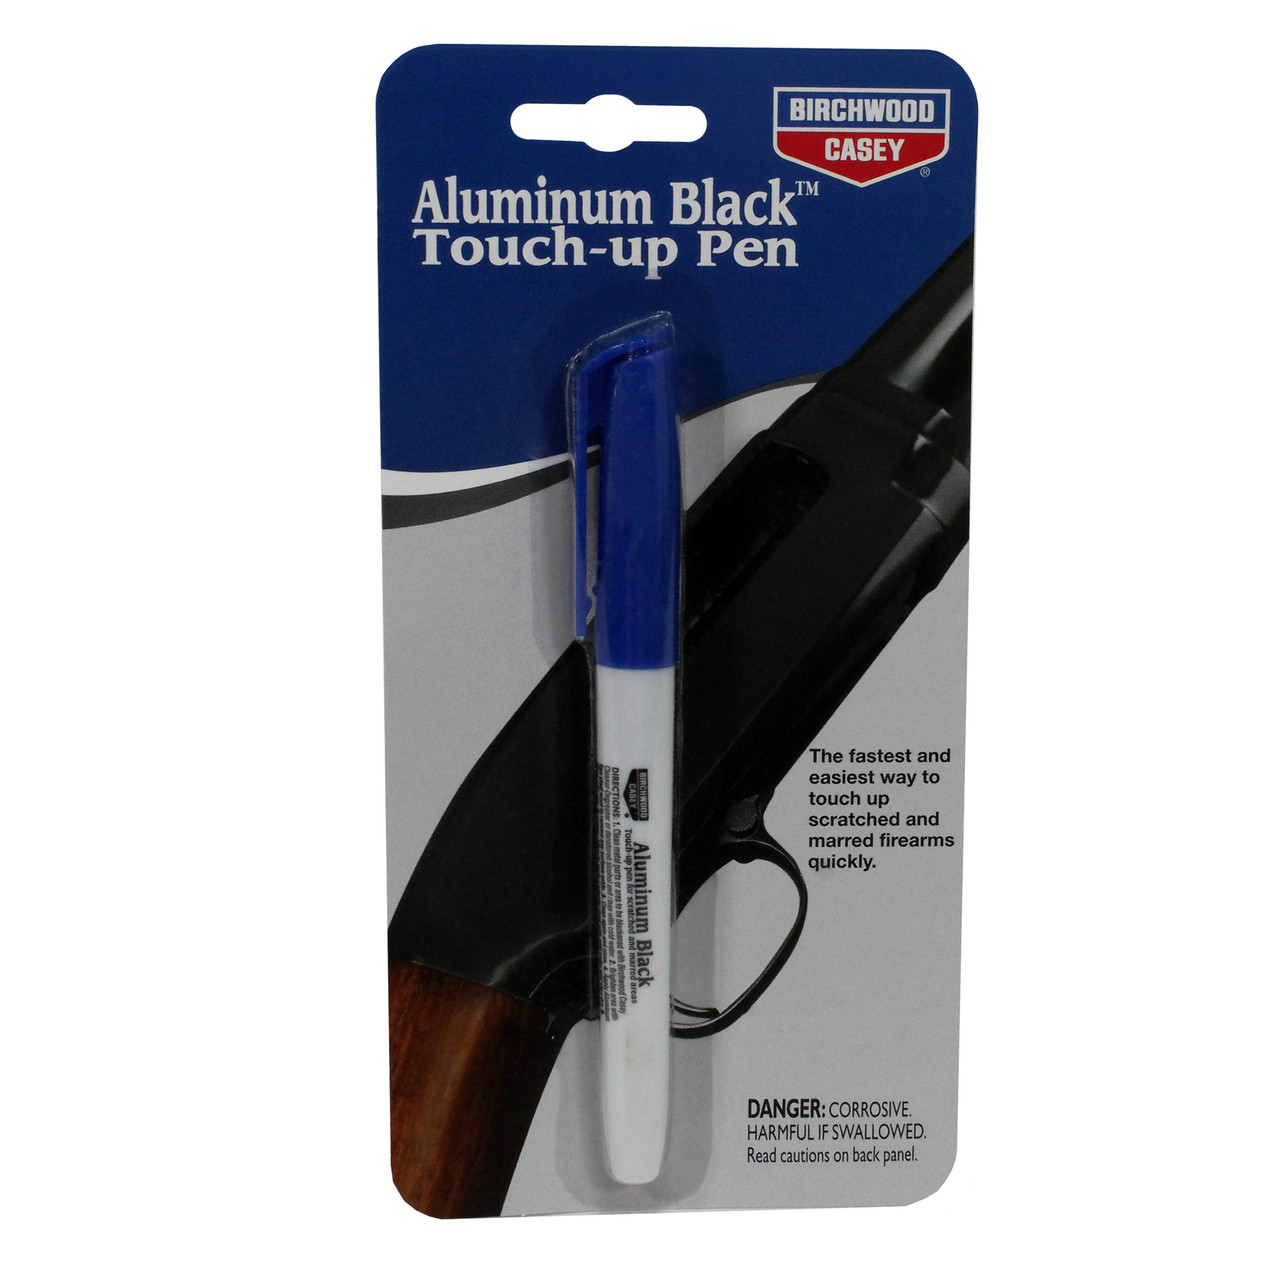 Birchwood Casey Aluminum Black Touch-Up Pen (15121) - Go Outdoor Gear